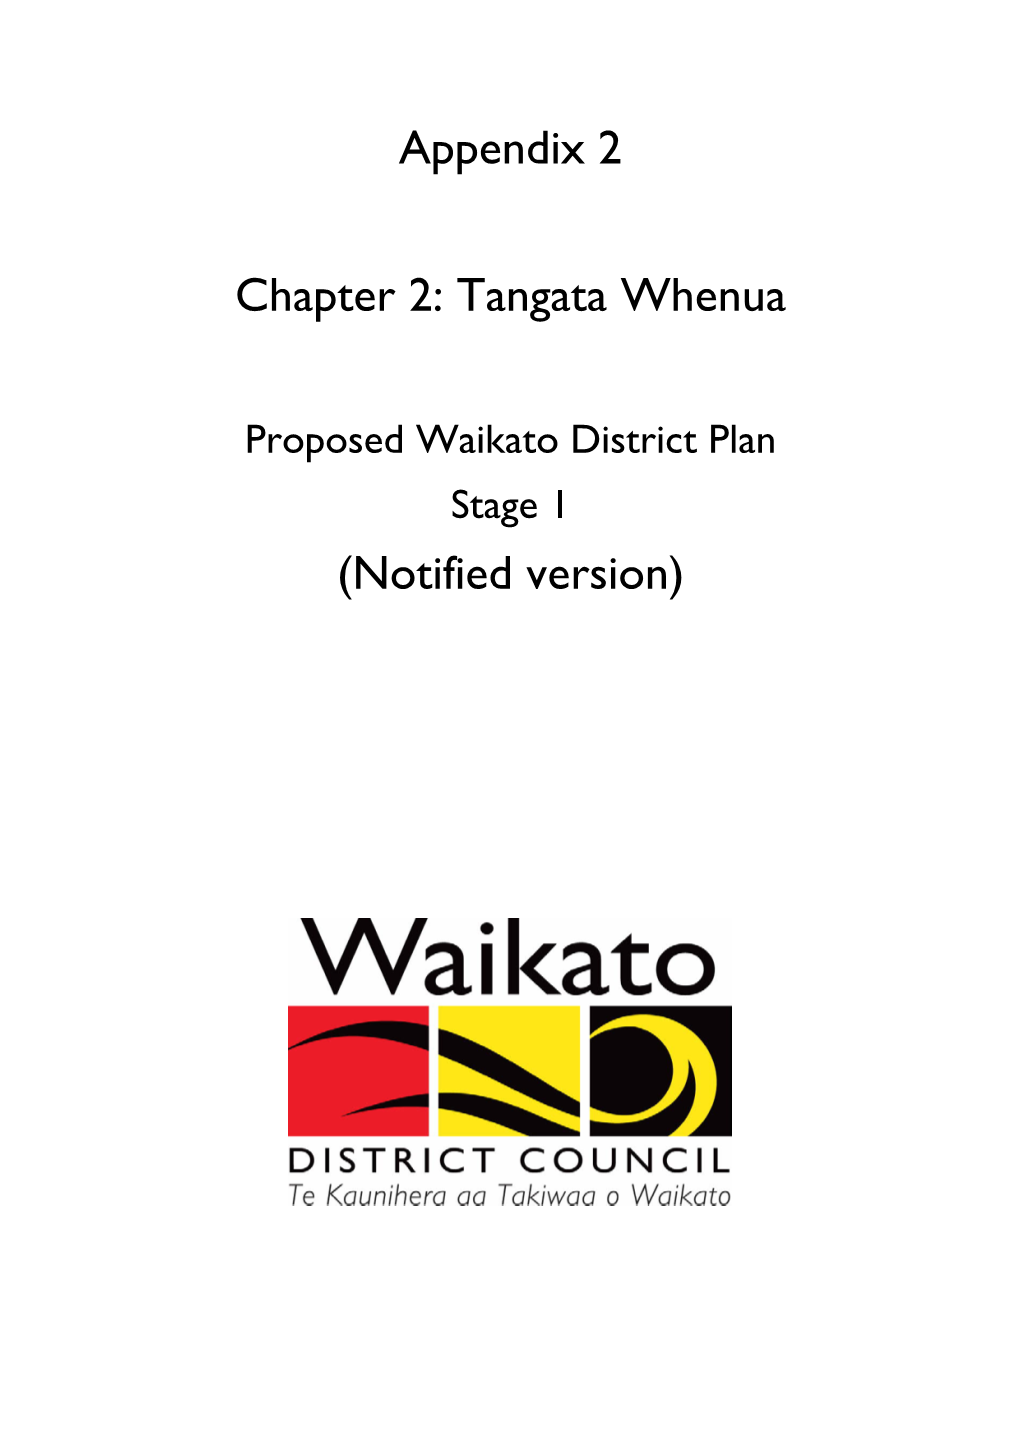 Appendix 2 Chapter 2: Tangata Whenua (Notified Version)